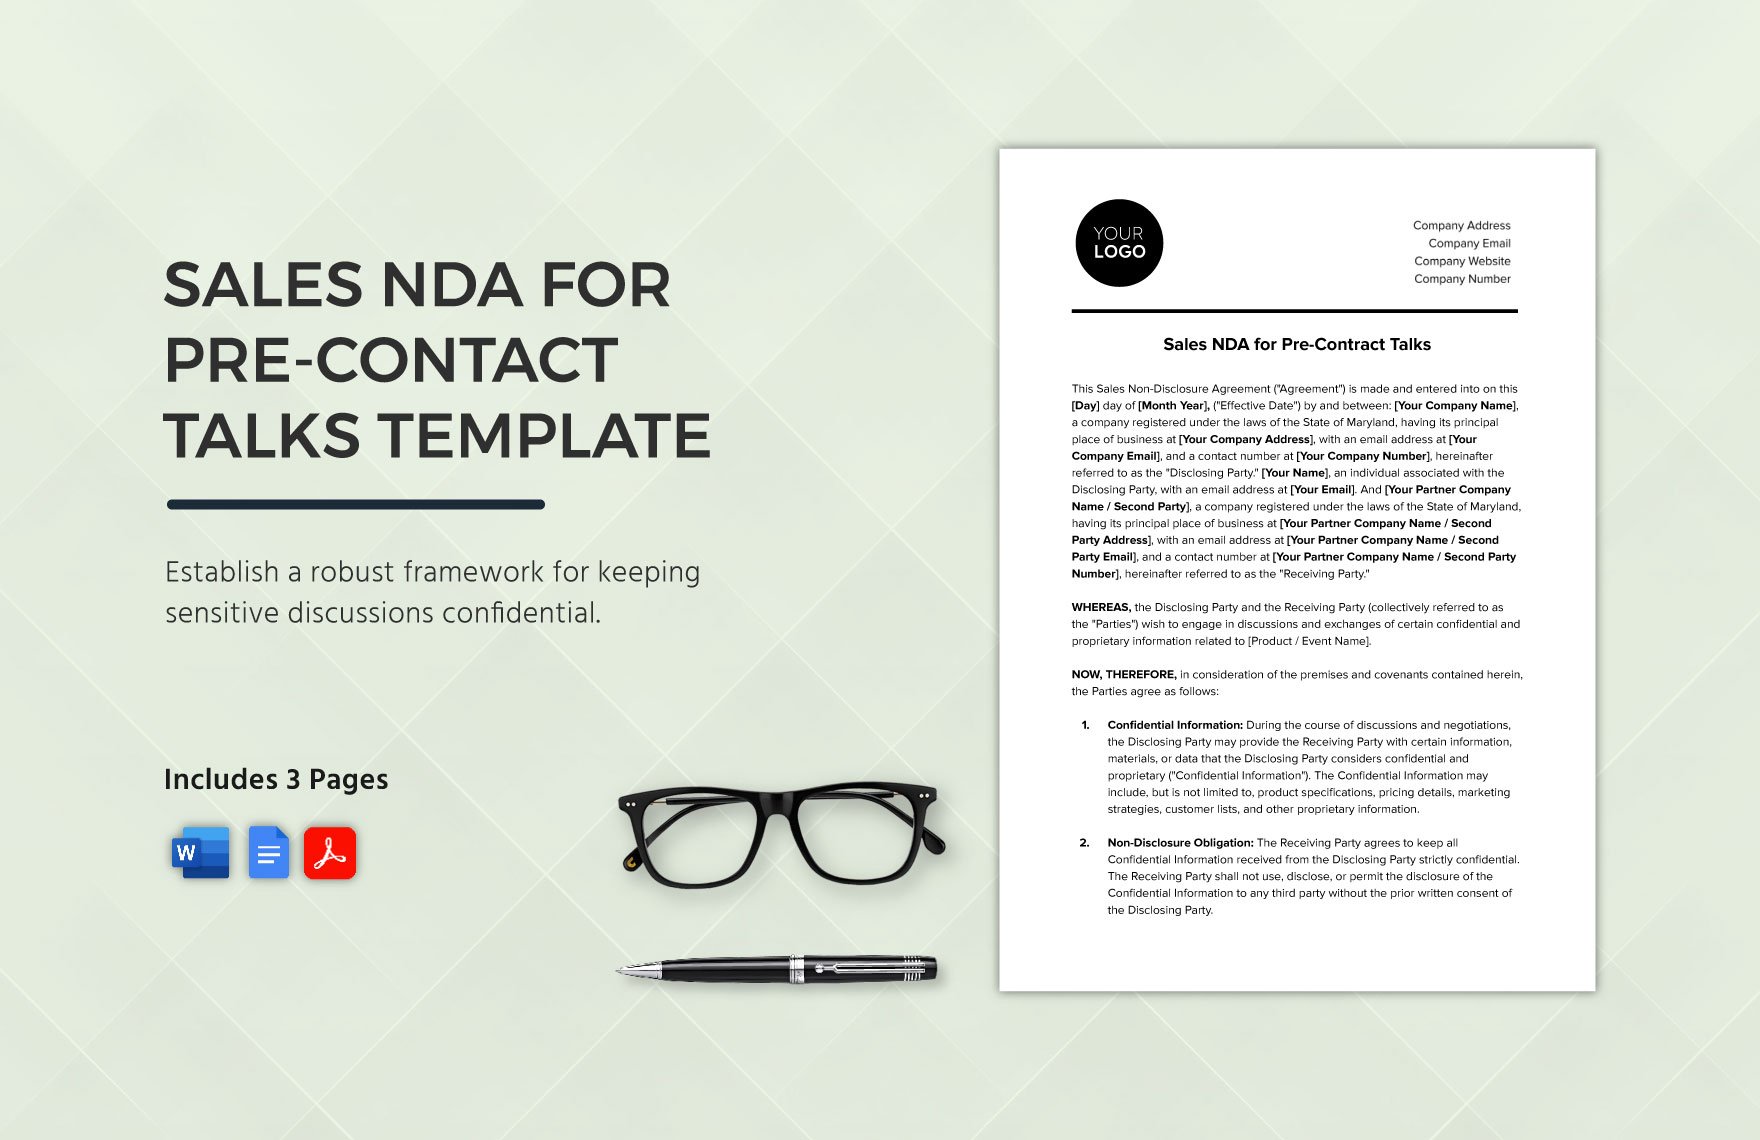 Sales NDA for Pre-Contract Talks Template